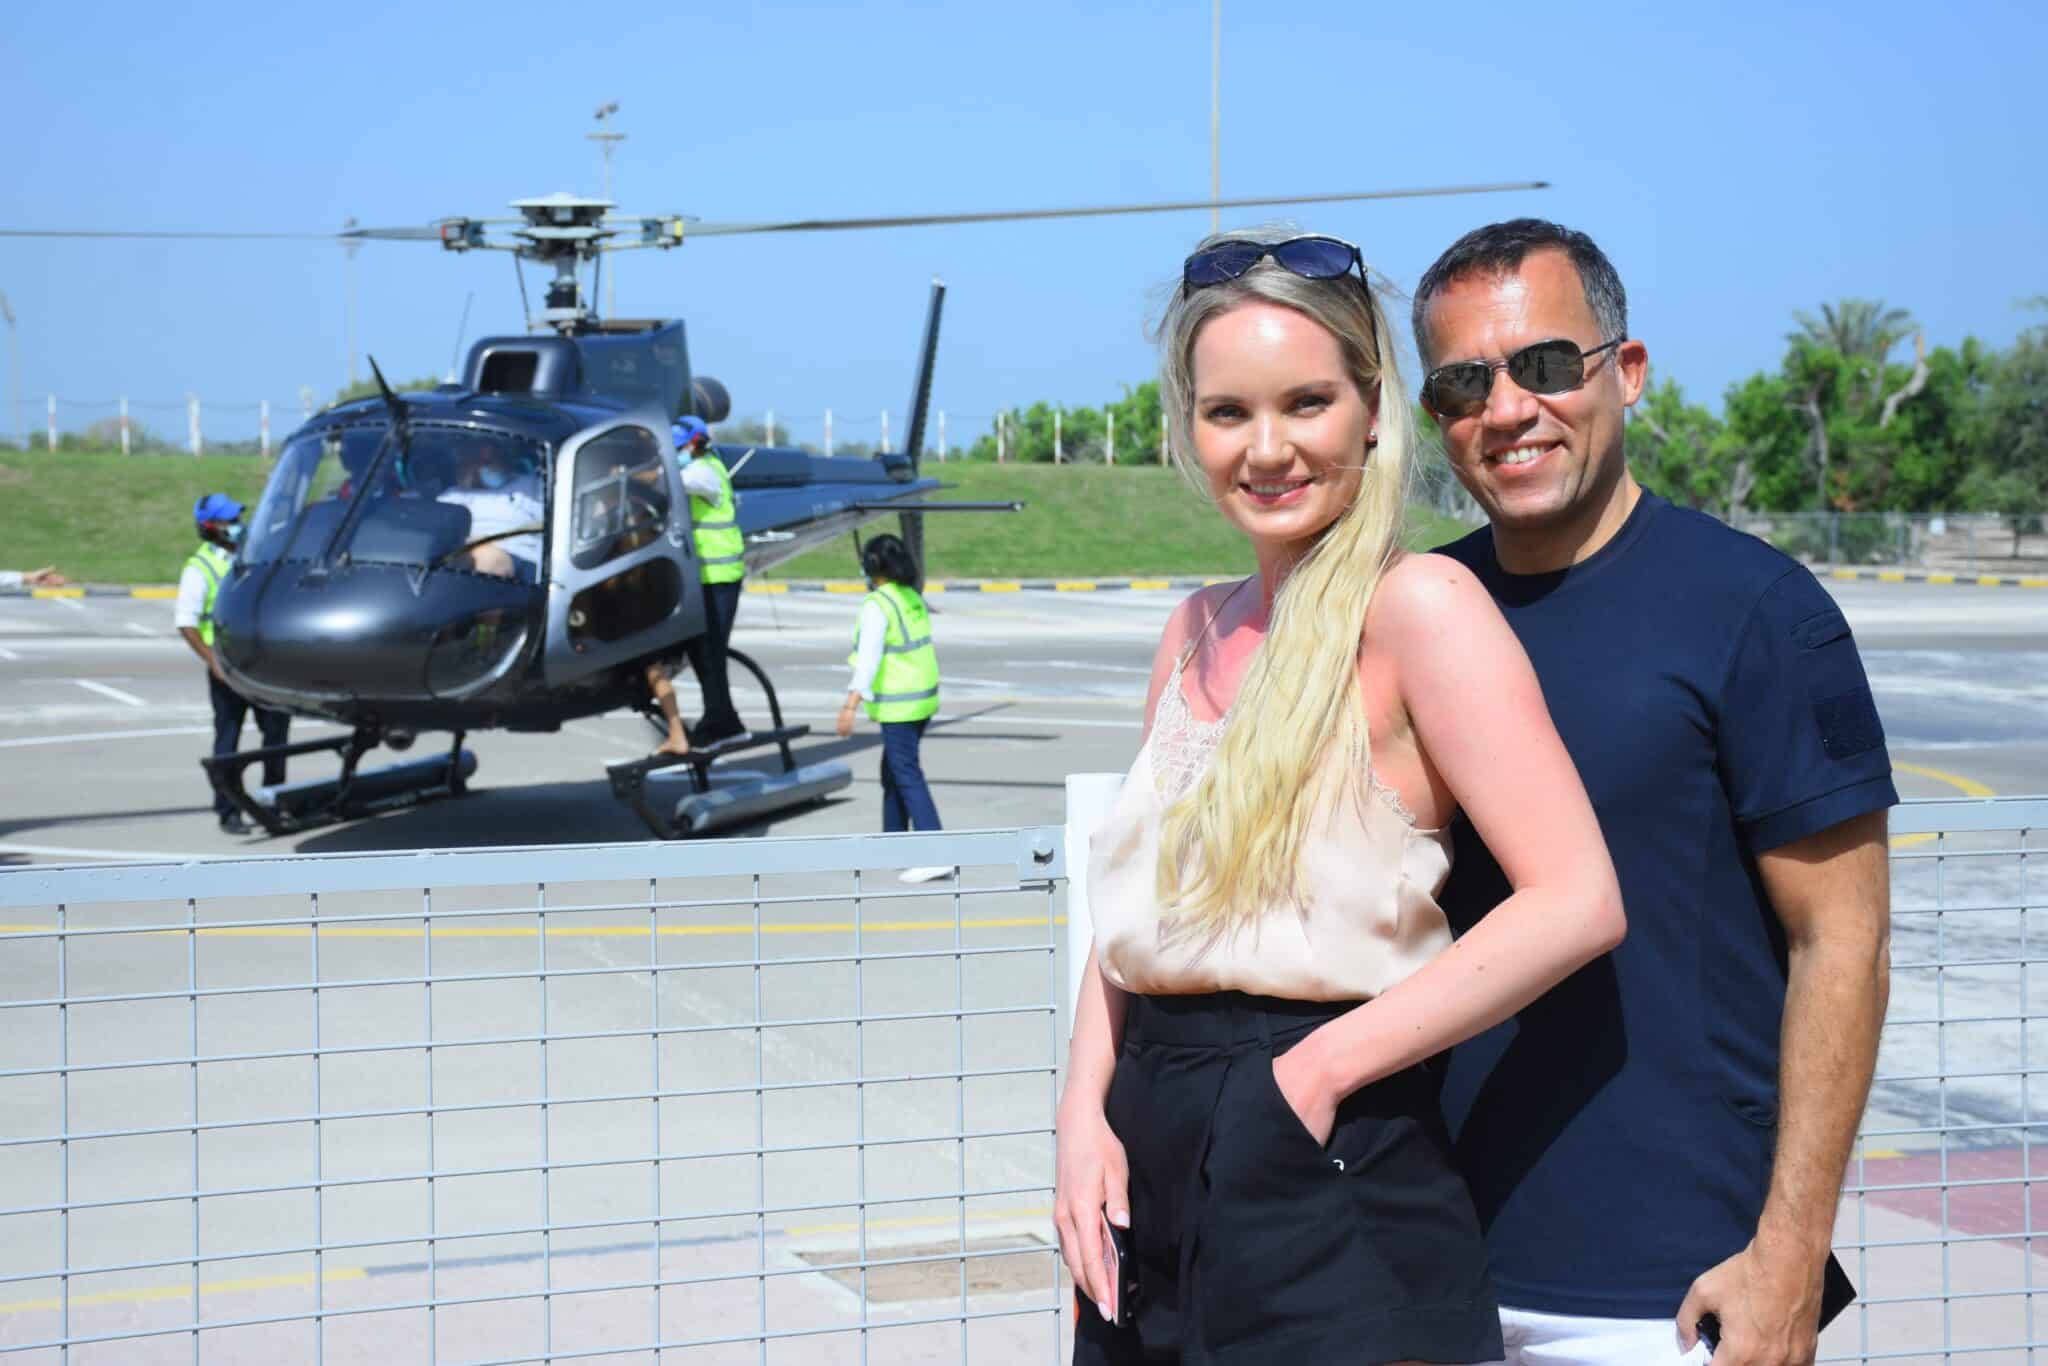 Helidubai | Helicopter tour | Helicopter tour Dubai | Helicopter tour in Dubai | Helicopter Ride Dubai | Helicopter Ride in UAE | Dubai Helicopter Tour | Helicopter tour Over Dubai | helicopter rides dubai